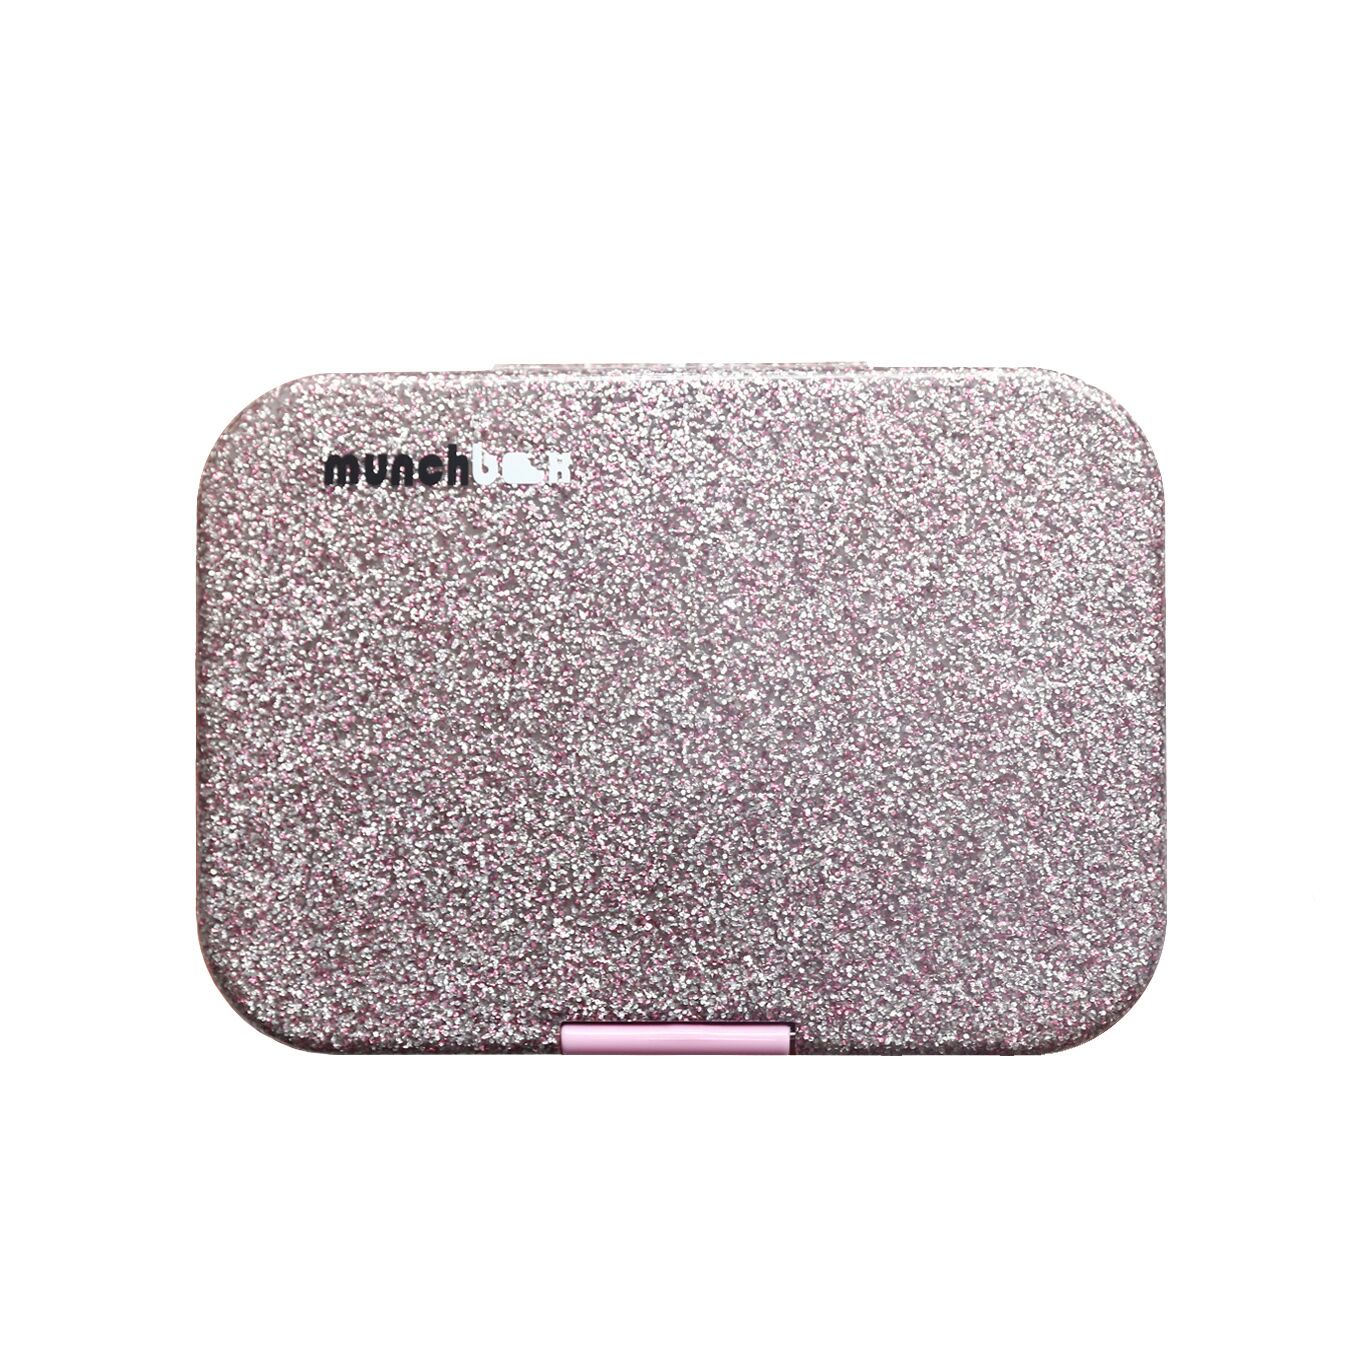 Munchbox Sparkle Pink Maxi 6